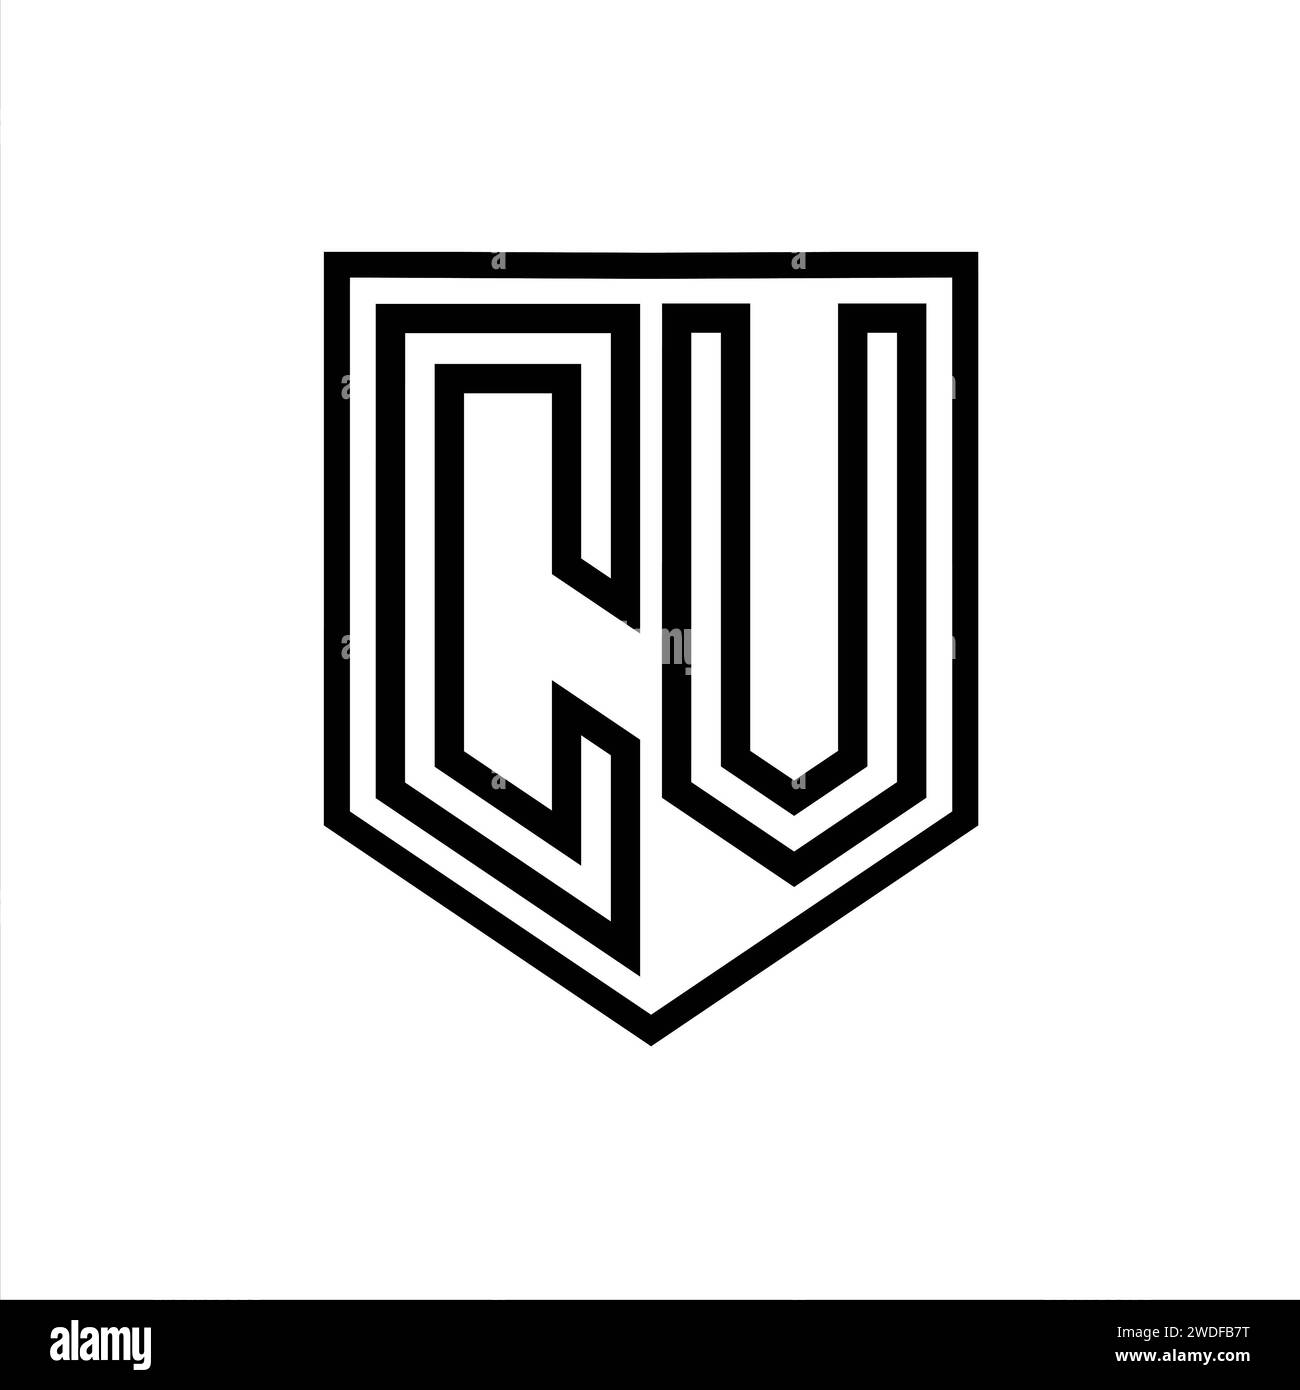 CV Letter Logo monogram shield geometric line inside shield isolated style design template Stock Photo